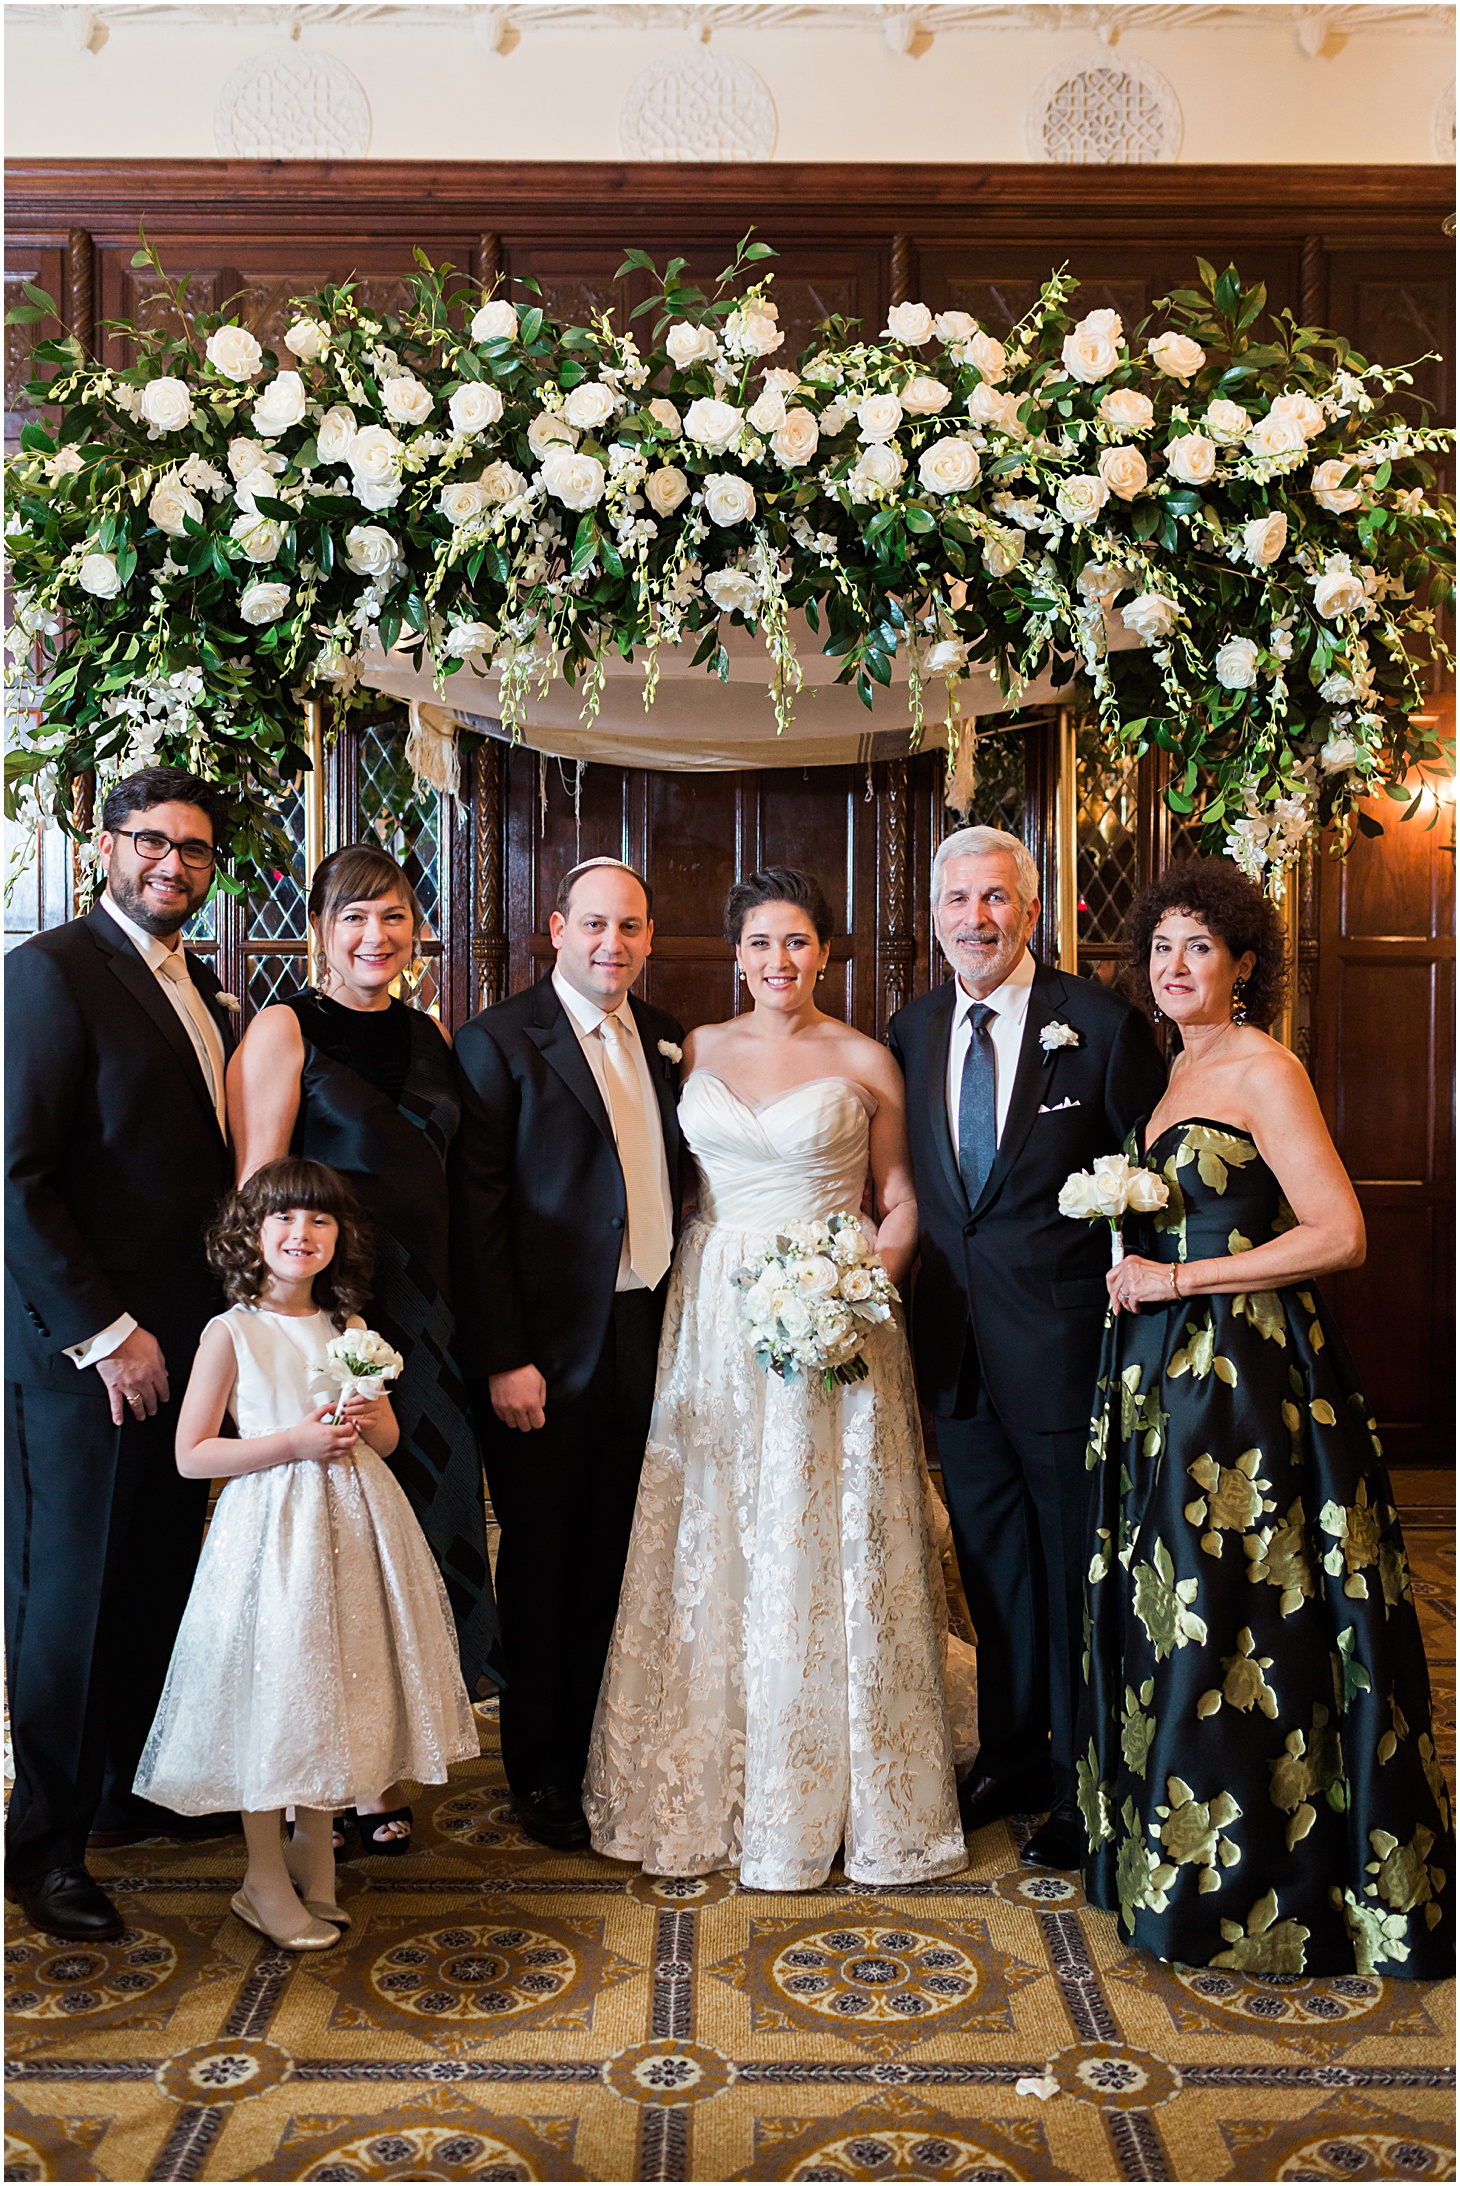 Hay-Adams Wedding Ceremony | Top Washington DC wedding photographer Sarah Bradshaw